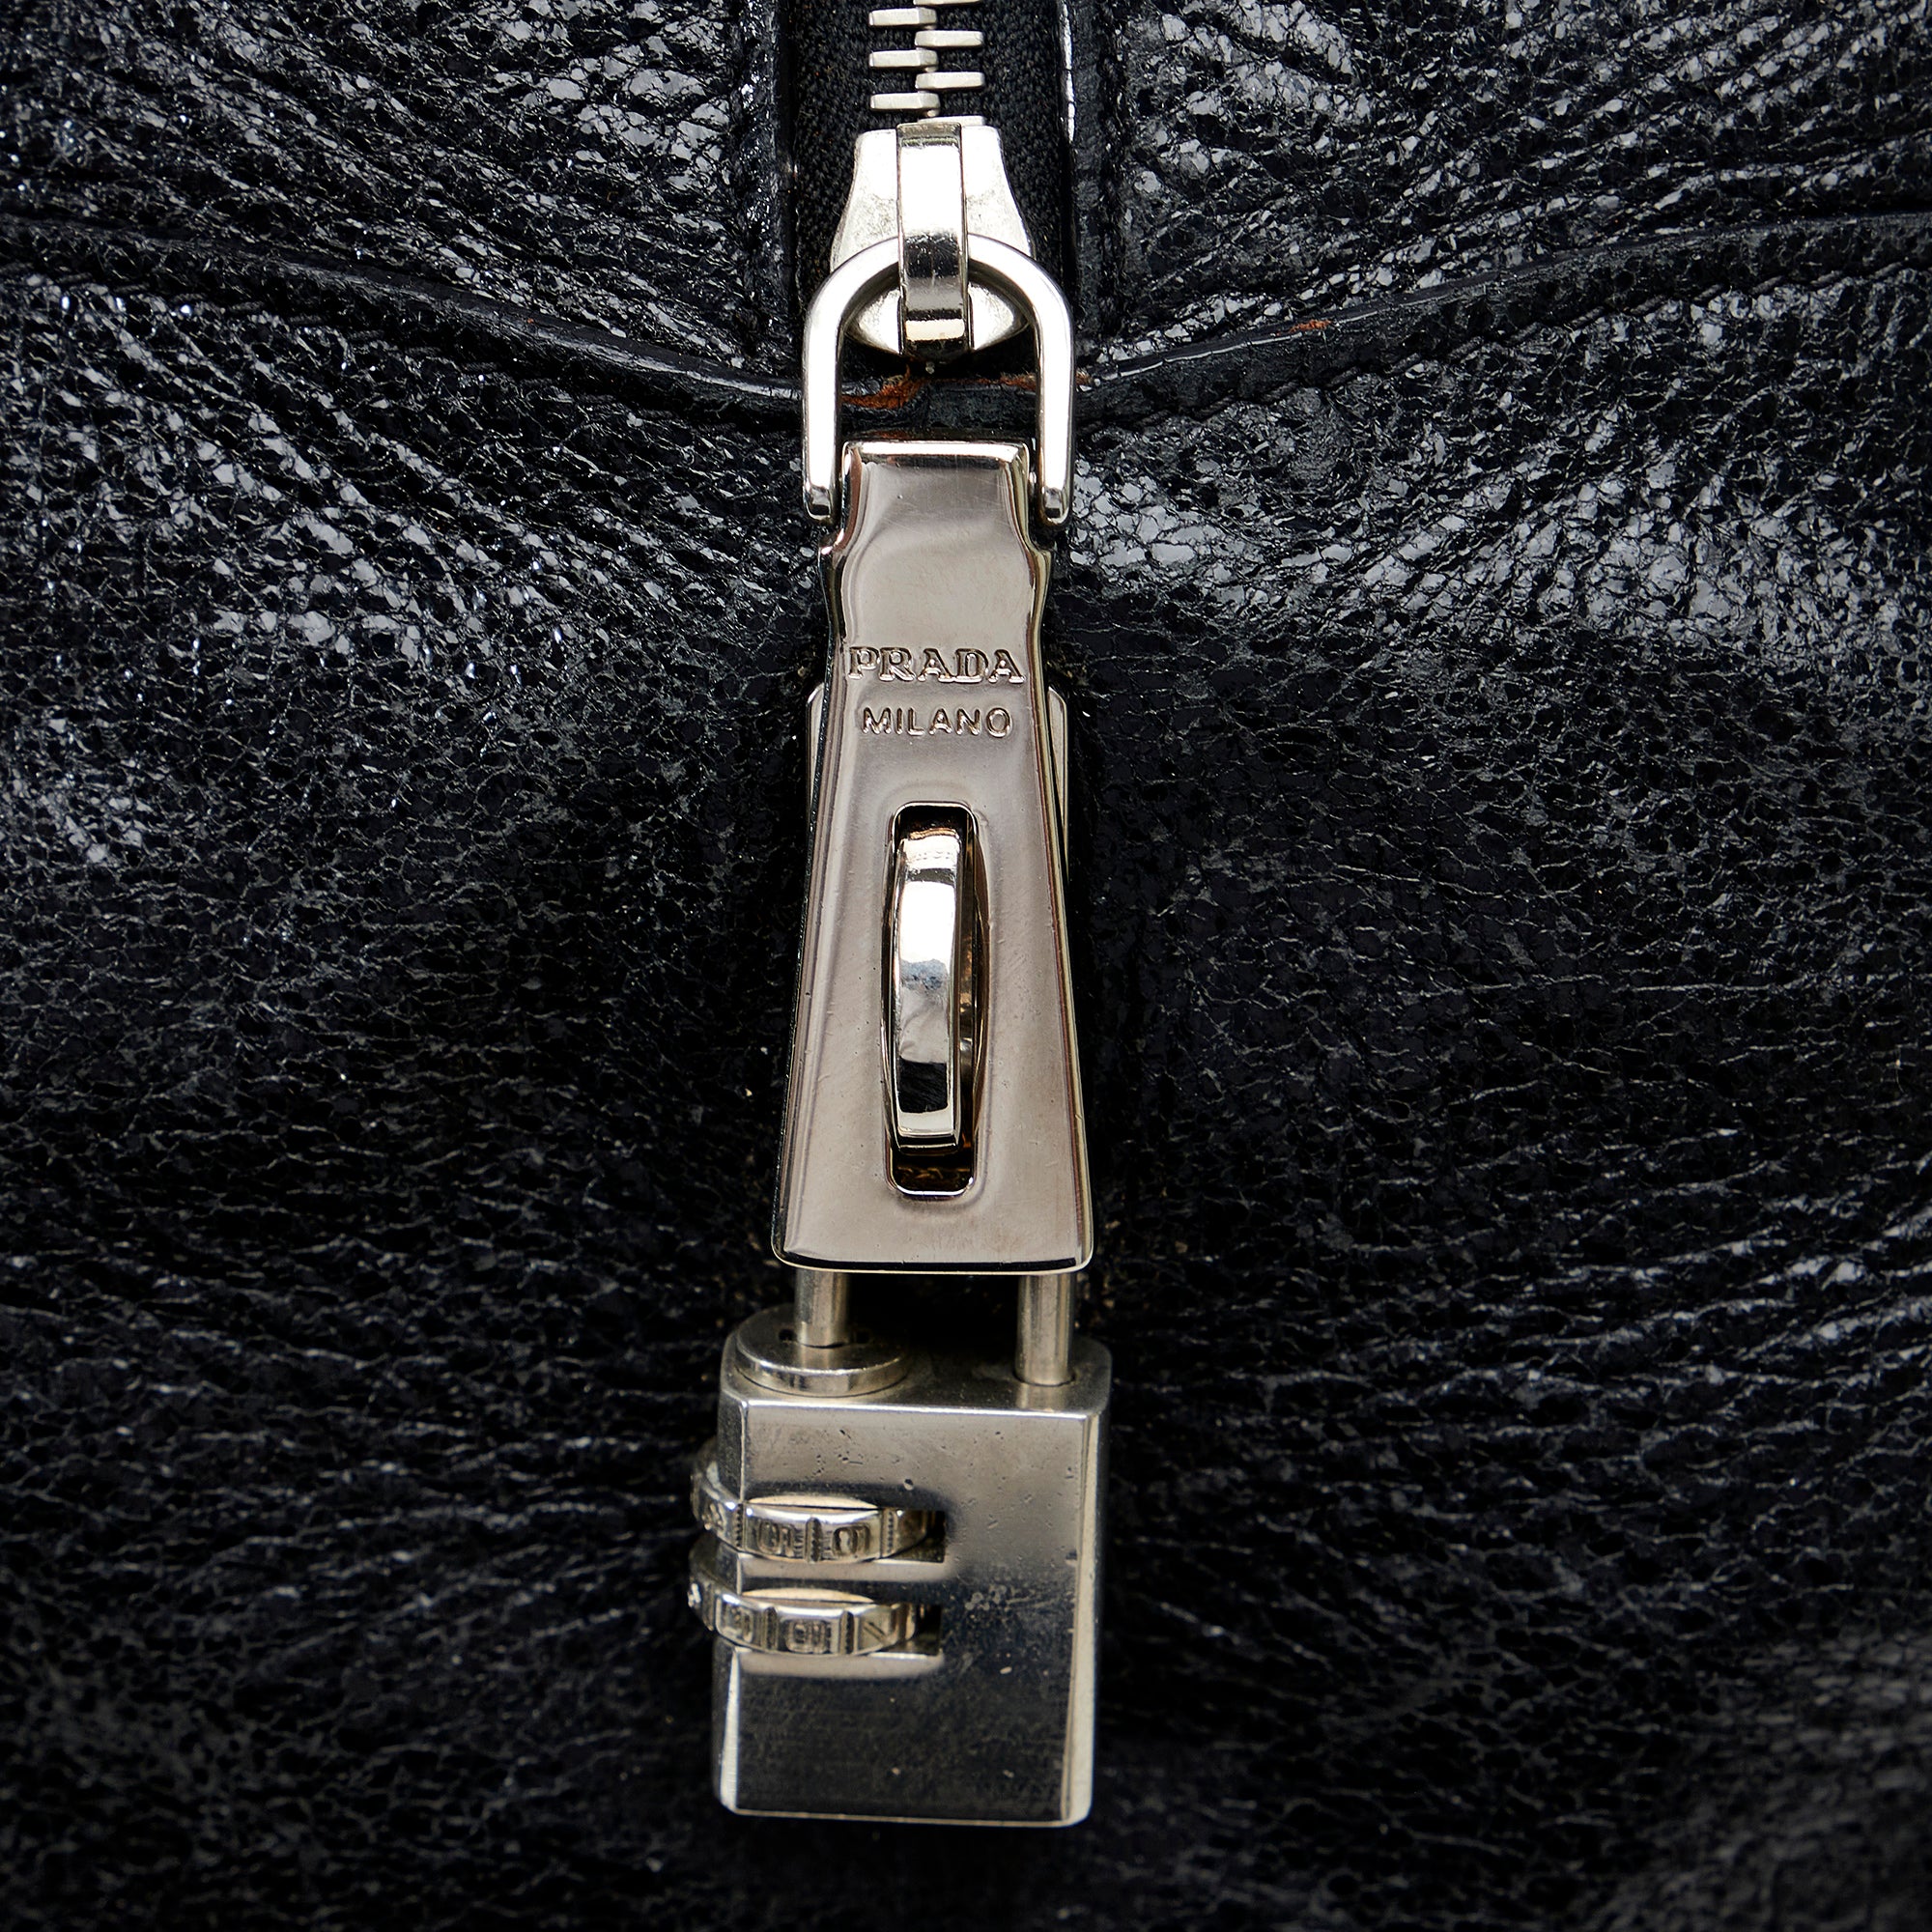 PRADA Black Leather silver chains Cervo Lux Bag